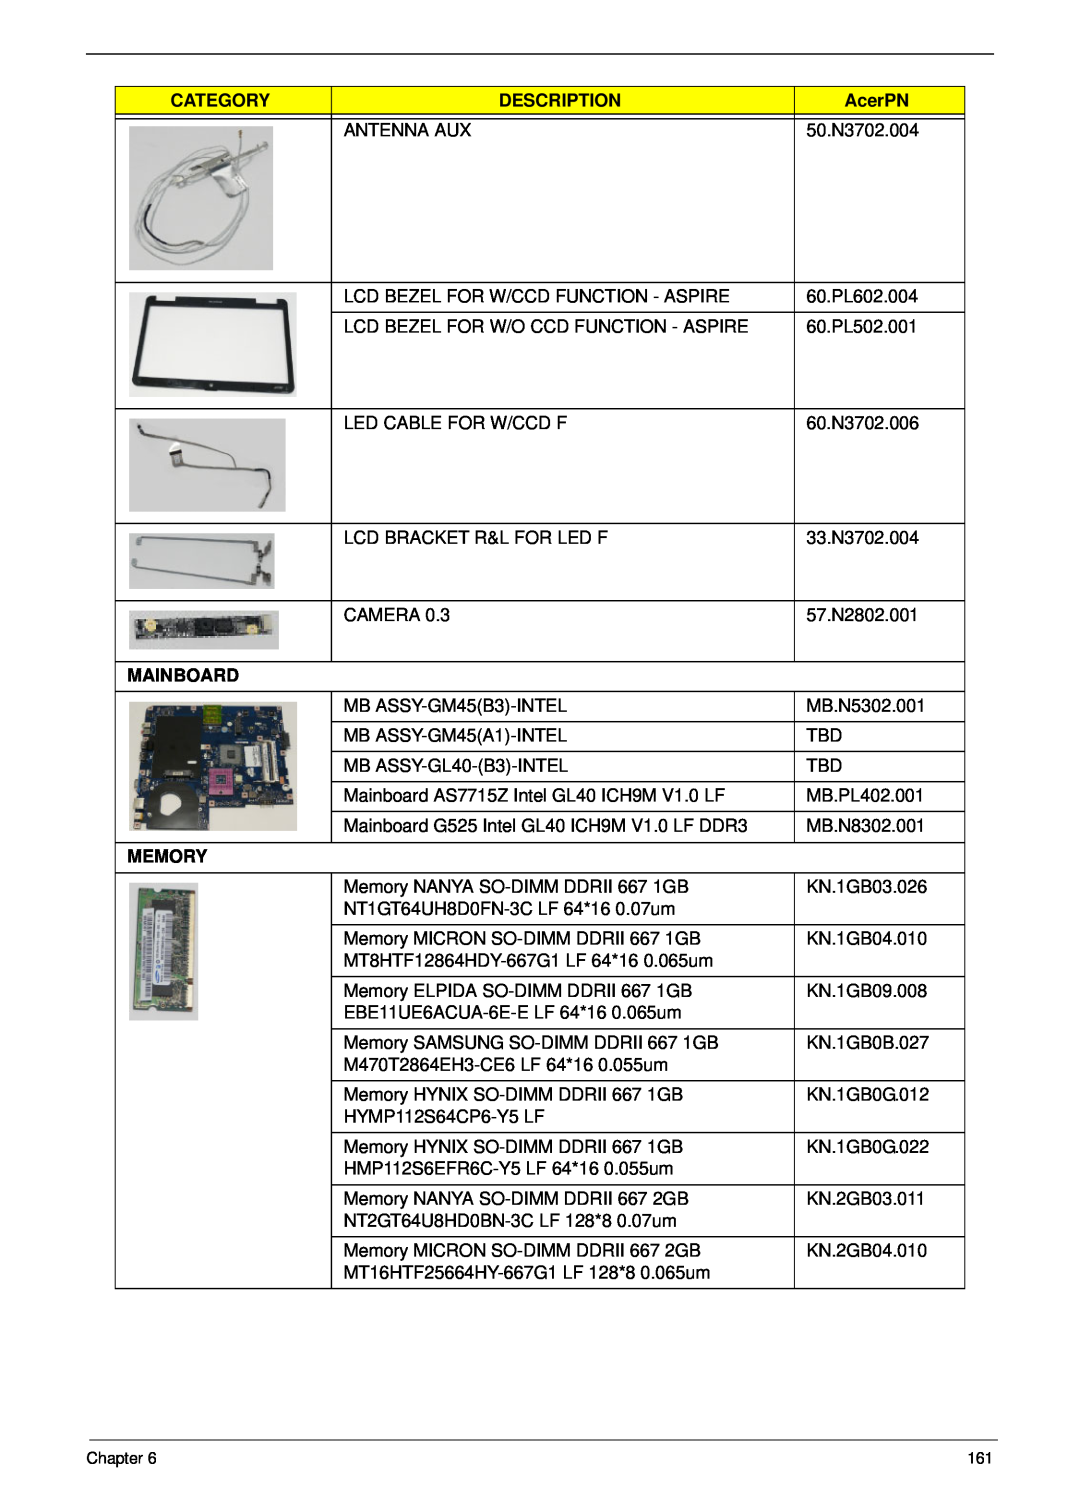 Acer 7315, 7715Z manual Category, Description, AcerPN, Mainboard, Memory 